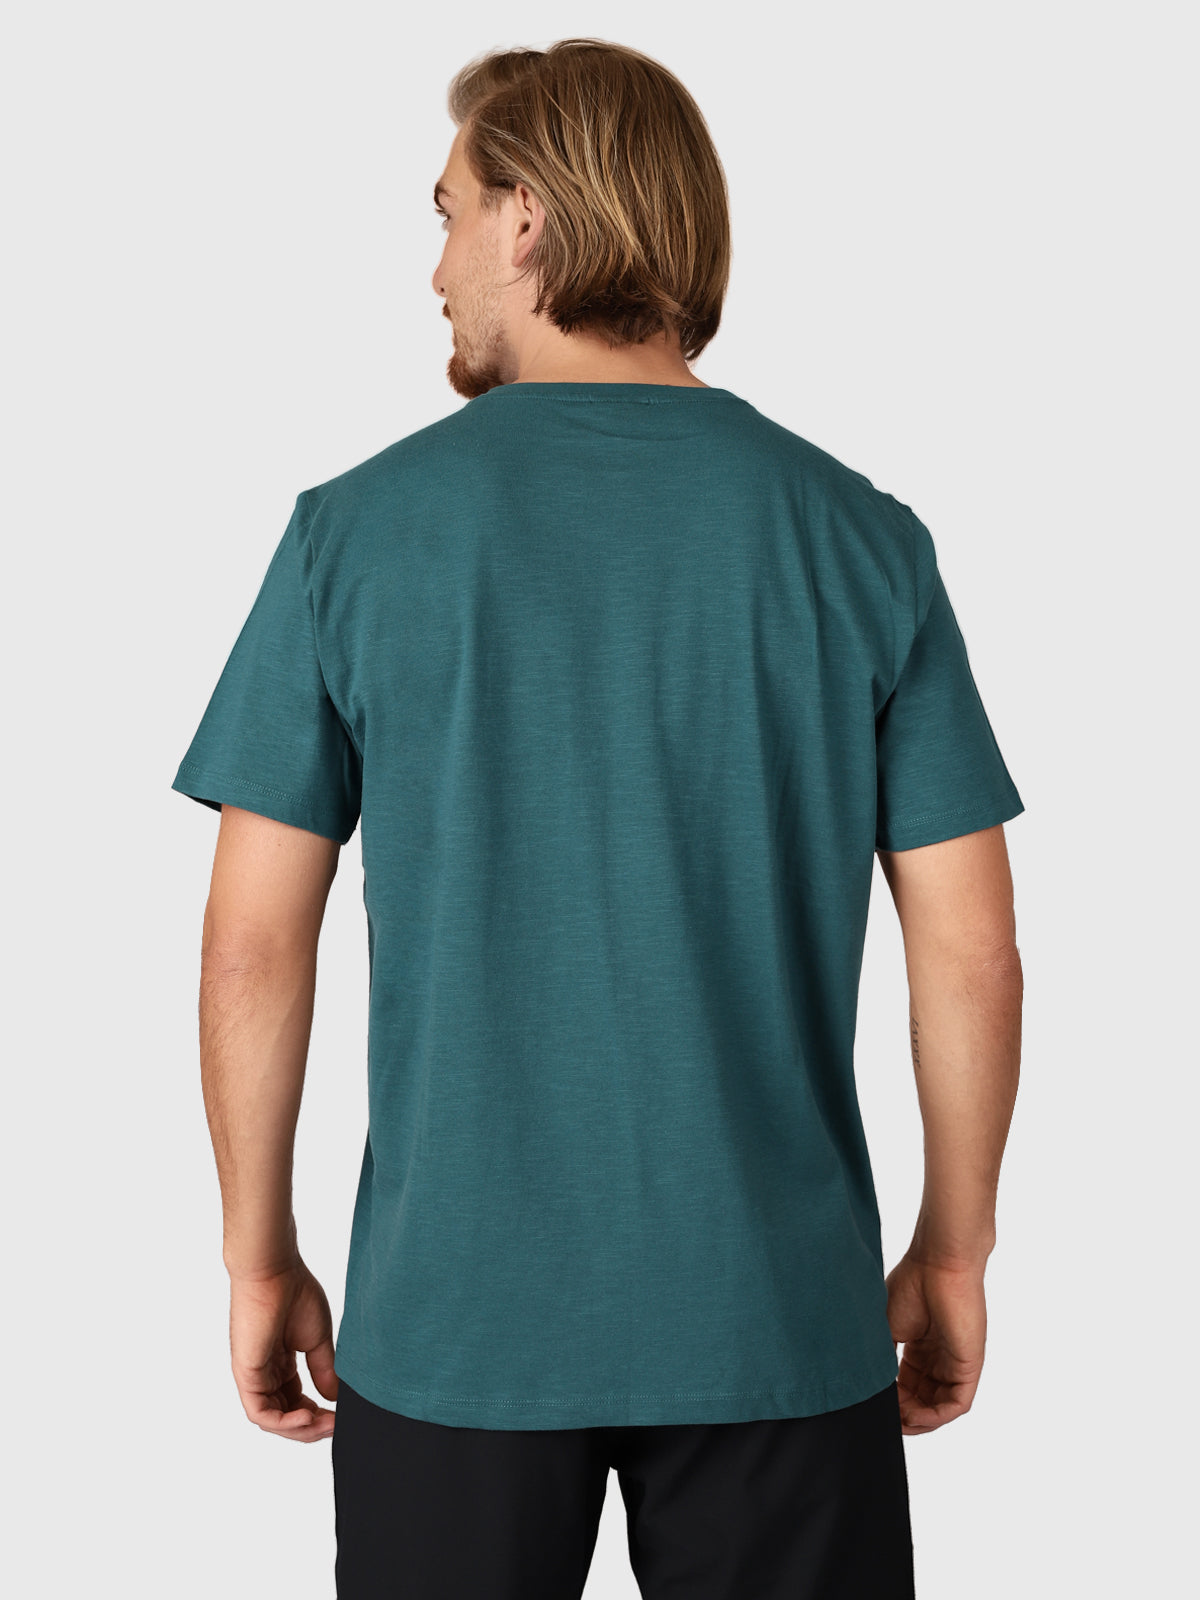 Axle-Slub Herren T-Shirt | Grün